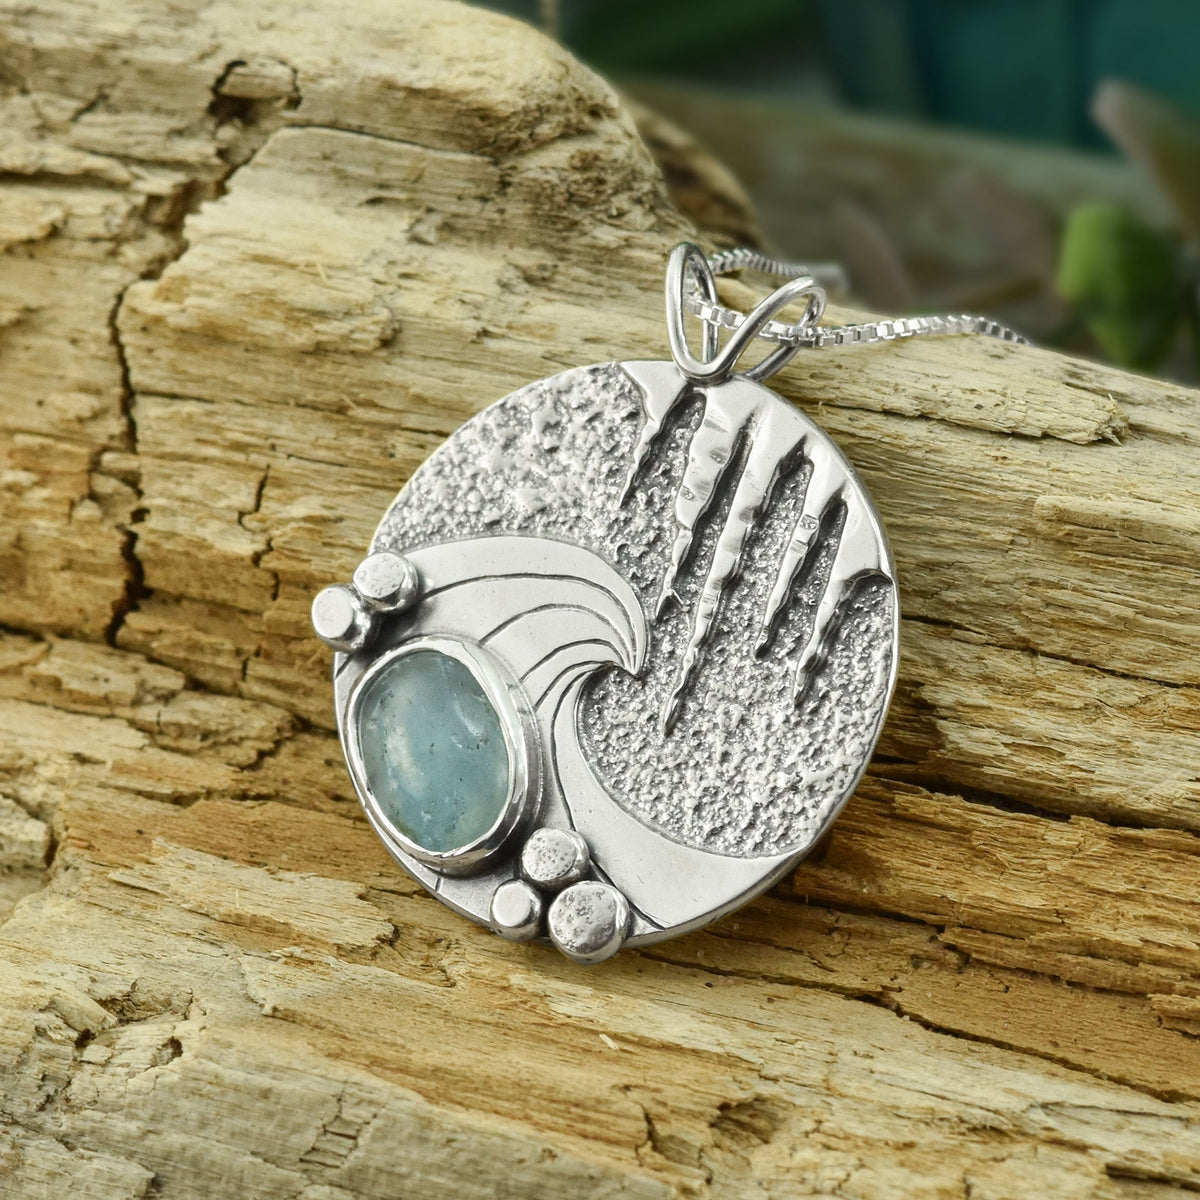 Frosted Shoreline Aquamarine Wonderland Pendant No. 2 - Silver Pendant   6932 - handmade by Beth Millner Jewelry